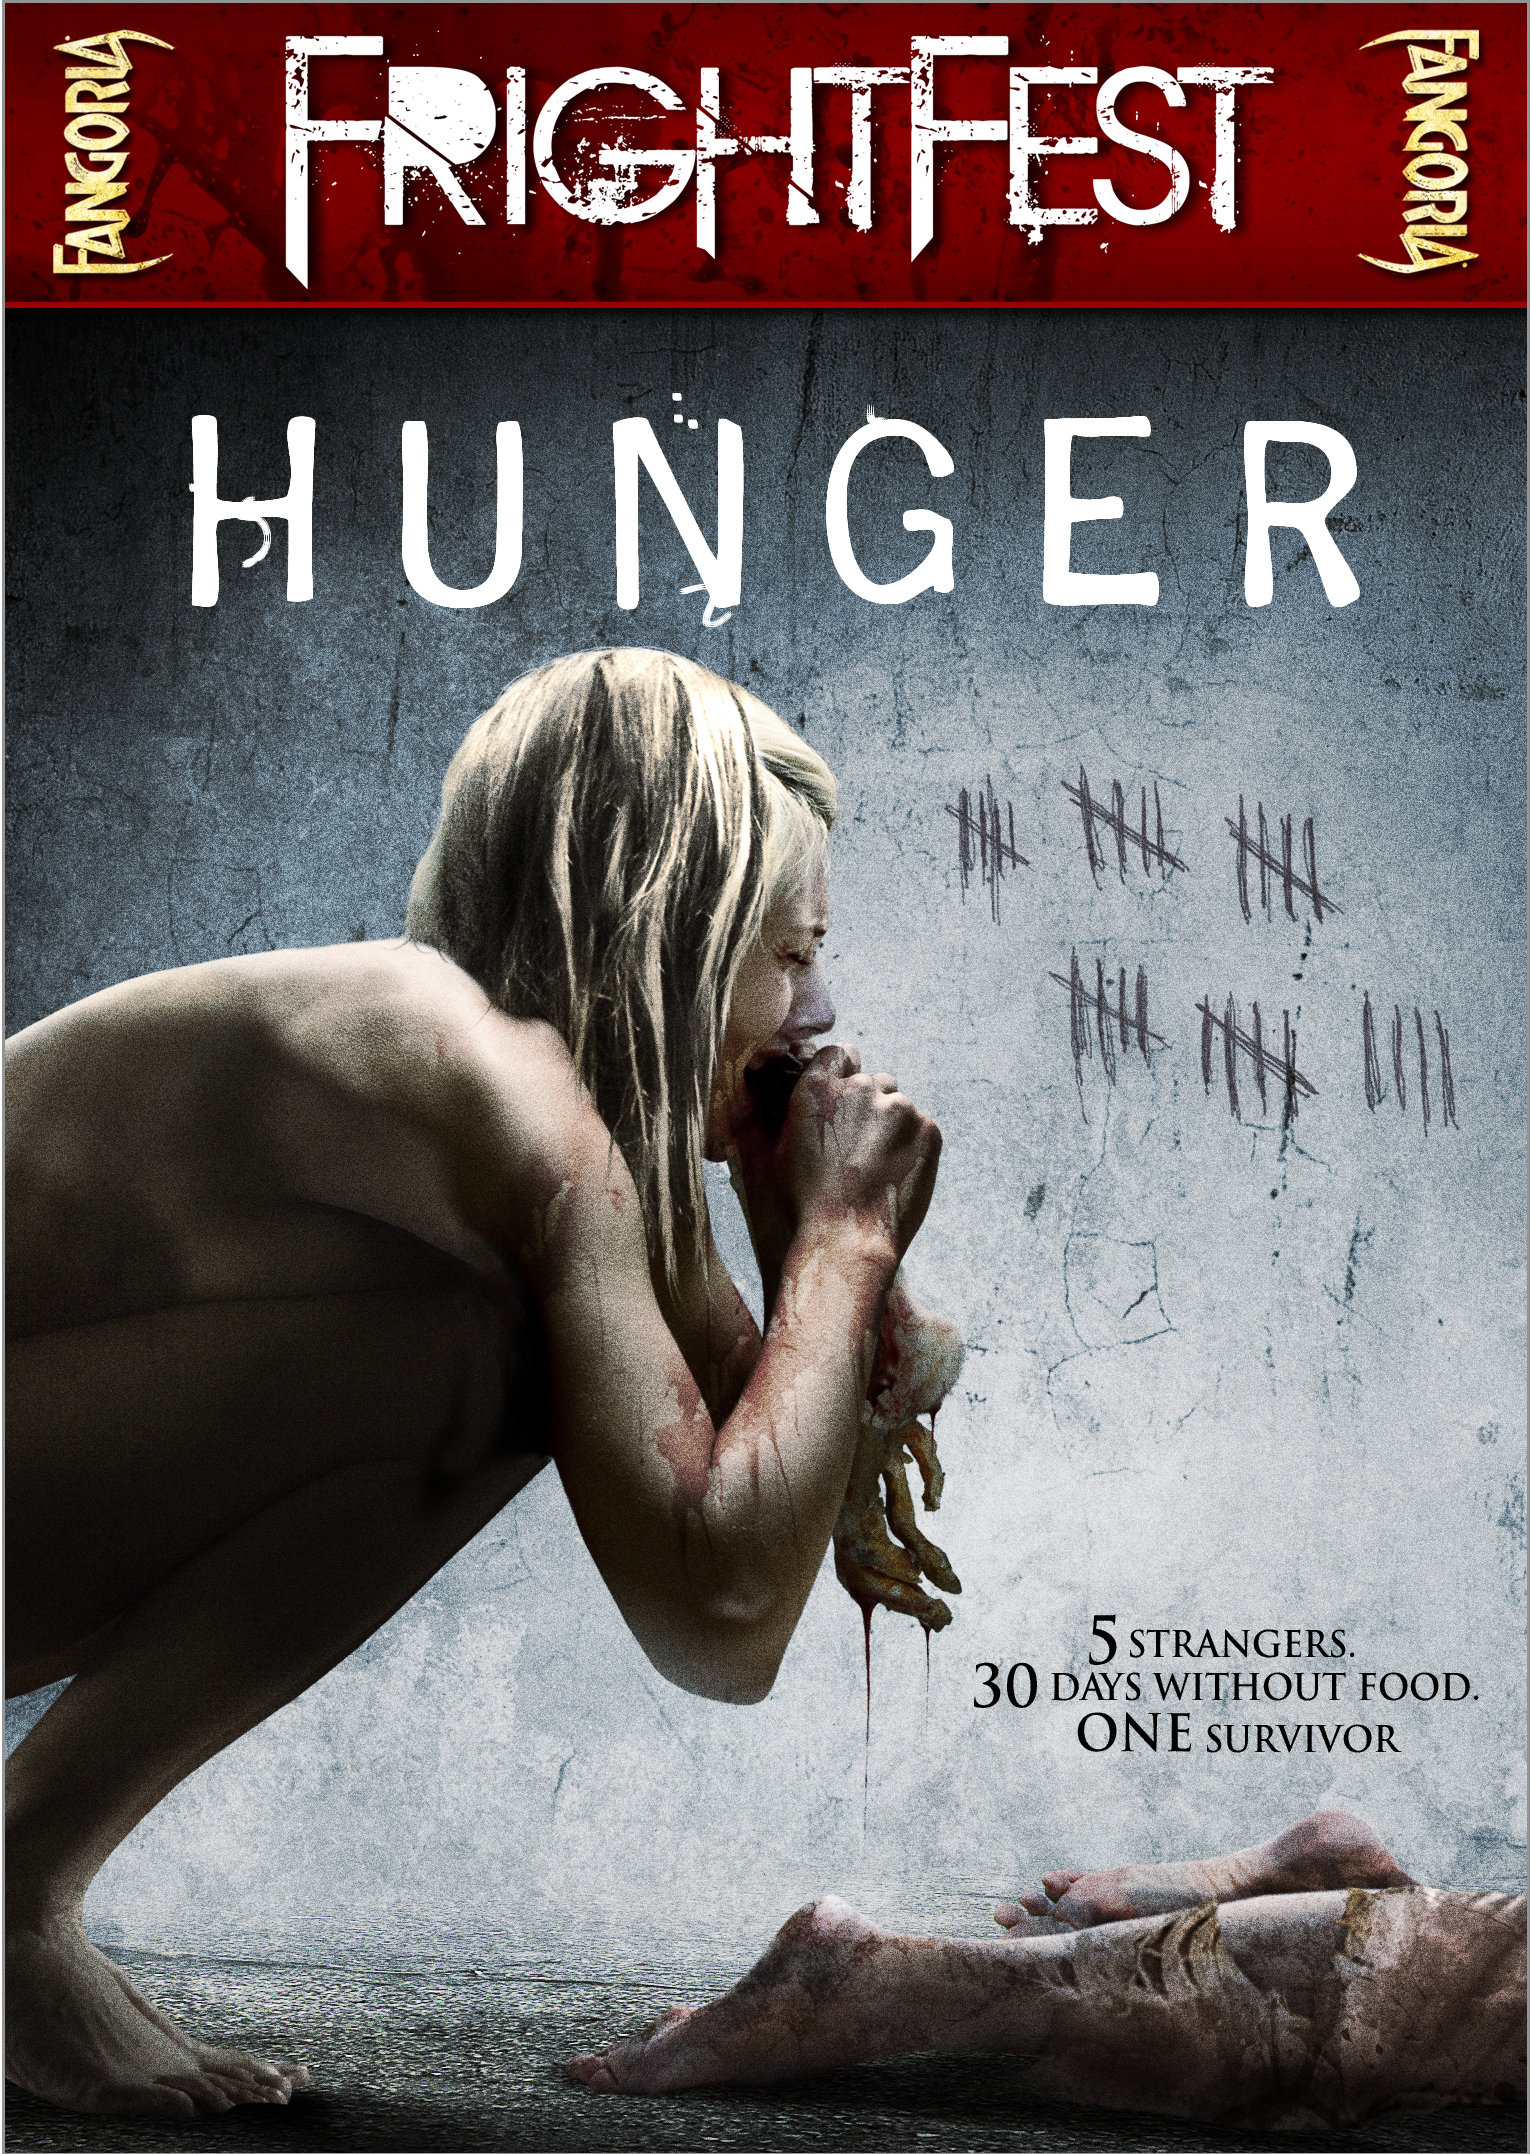 Stiahni si Filmy CZ/SK dabing Hladova hra / Hunger (2009)(CZ) = CSFD 46%